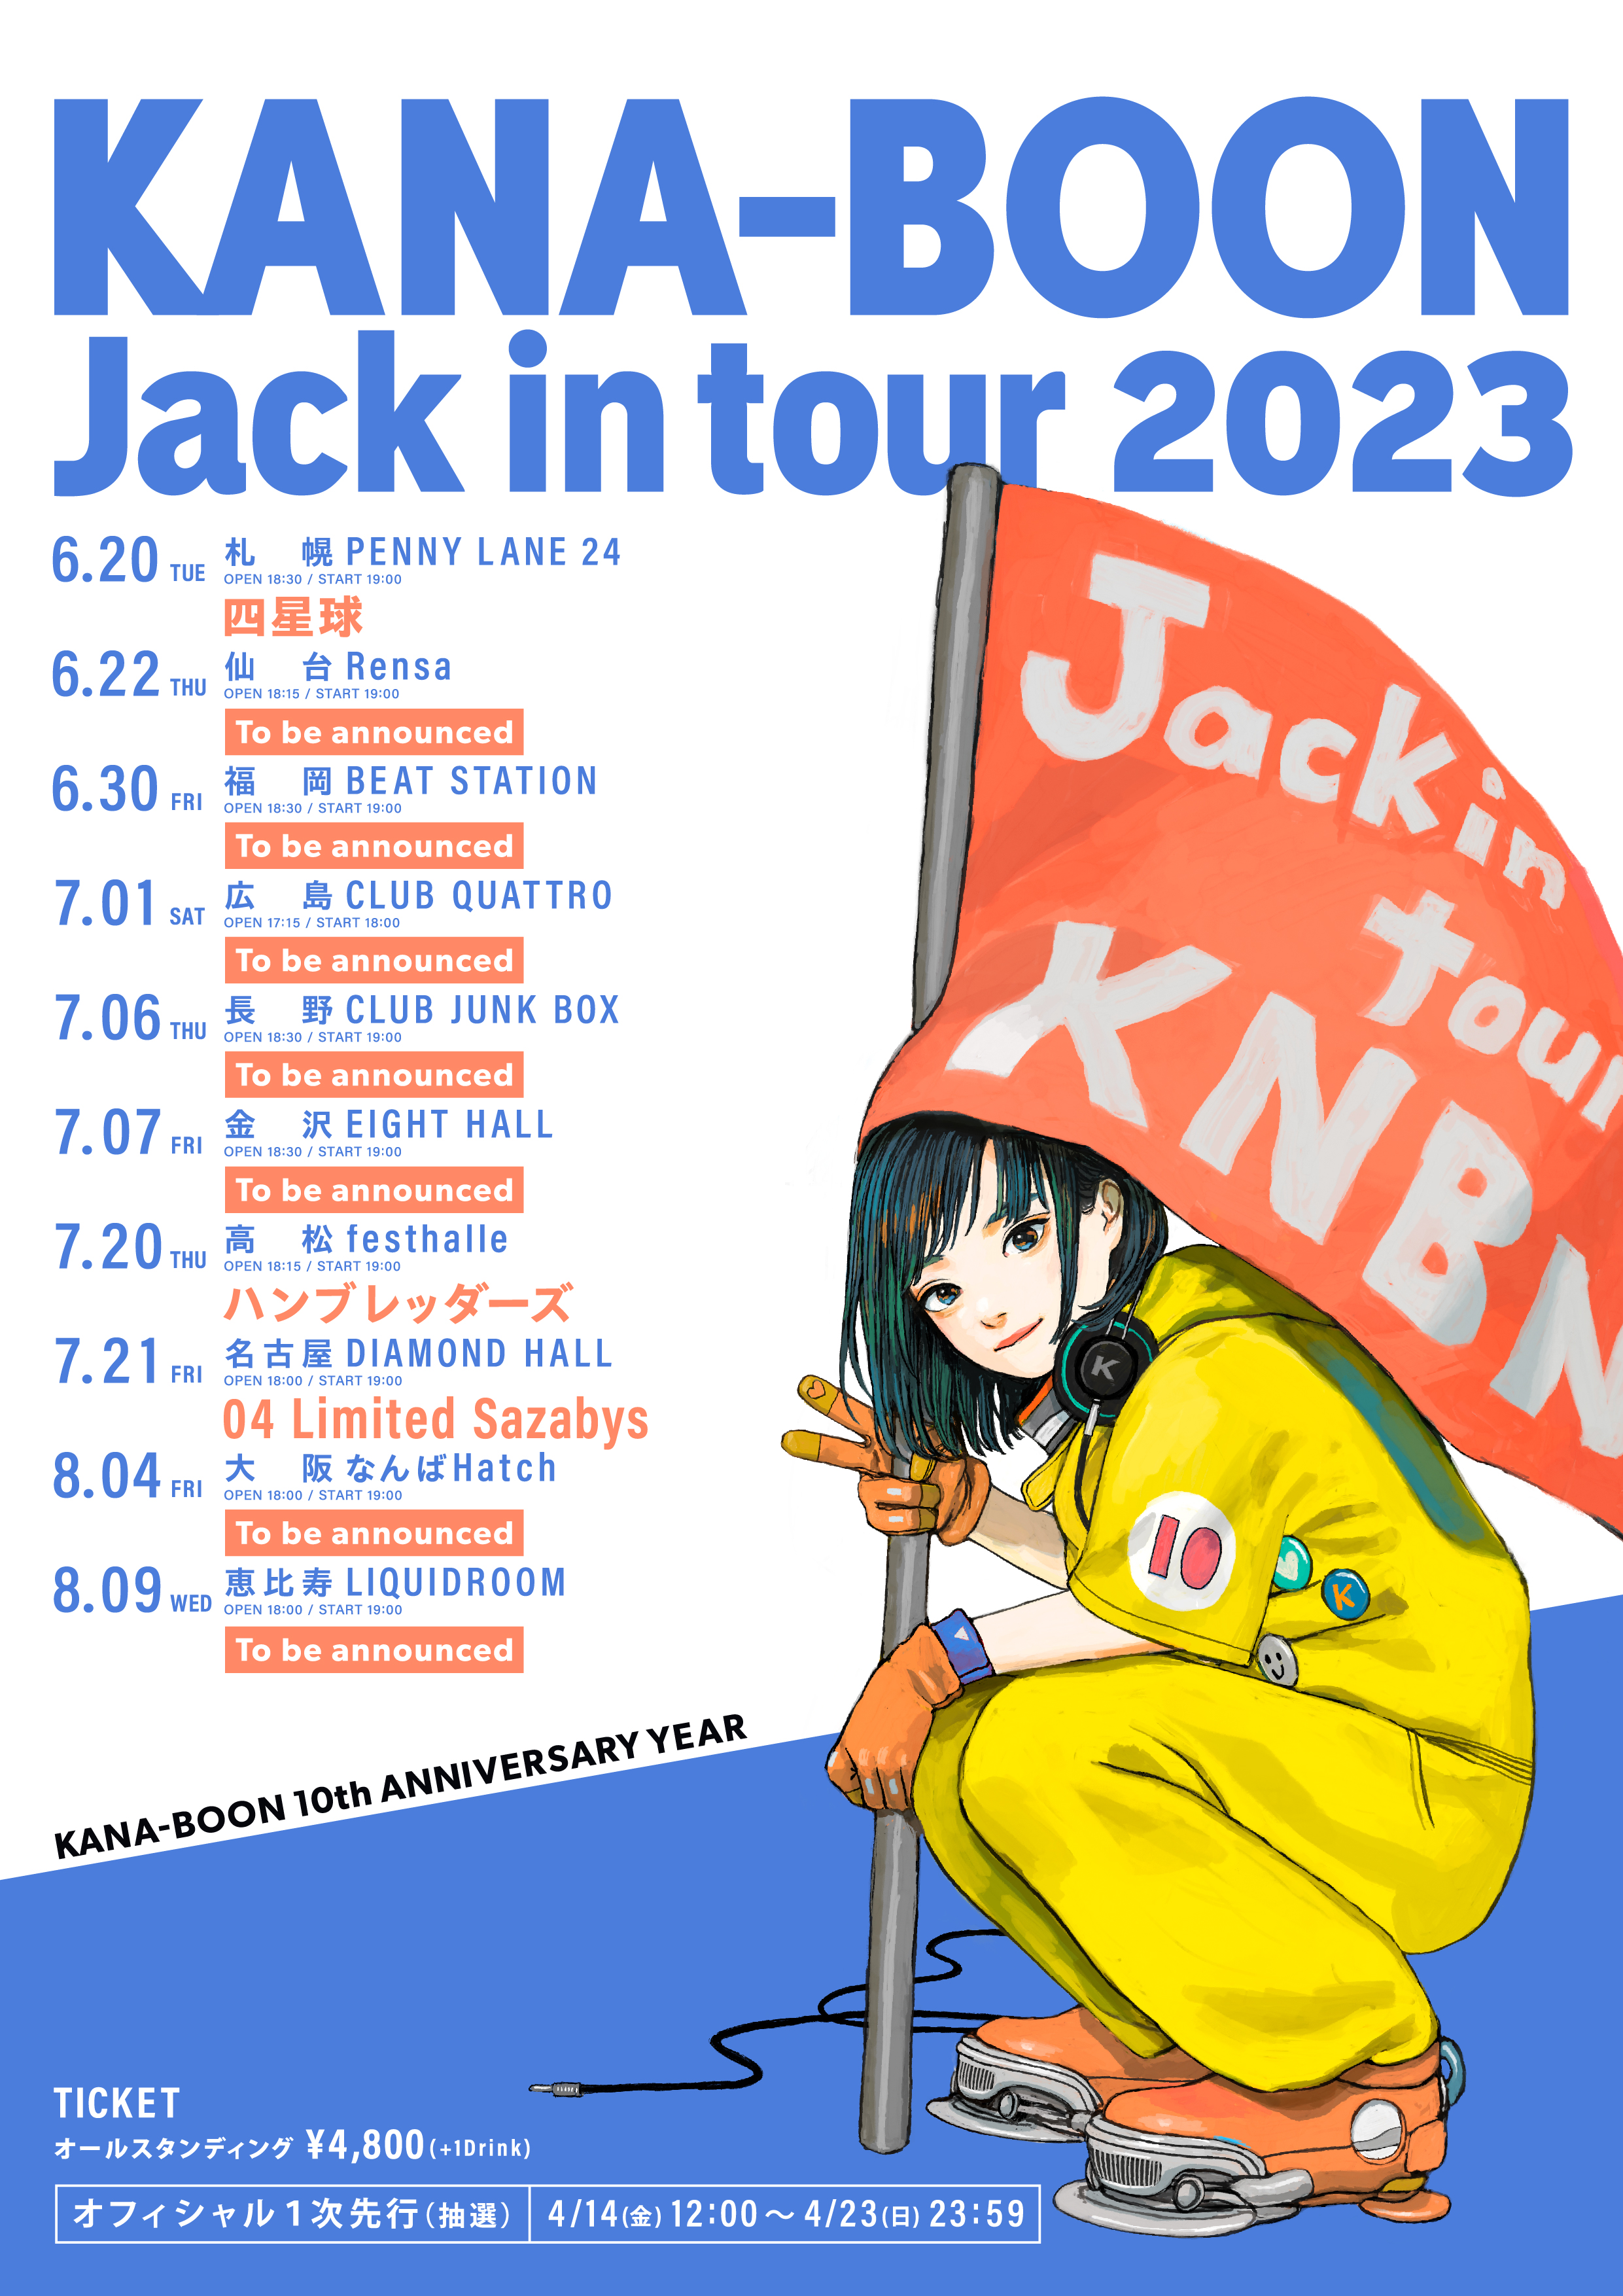 KANA-BOON "Jack in tour 2023" 出演決定！